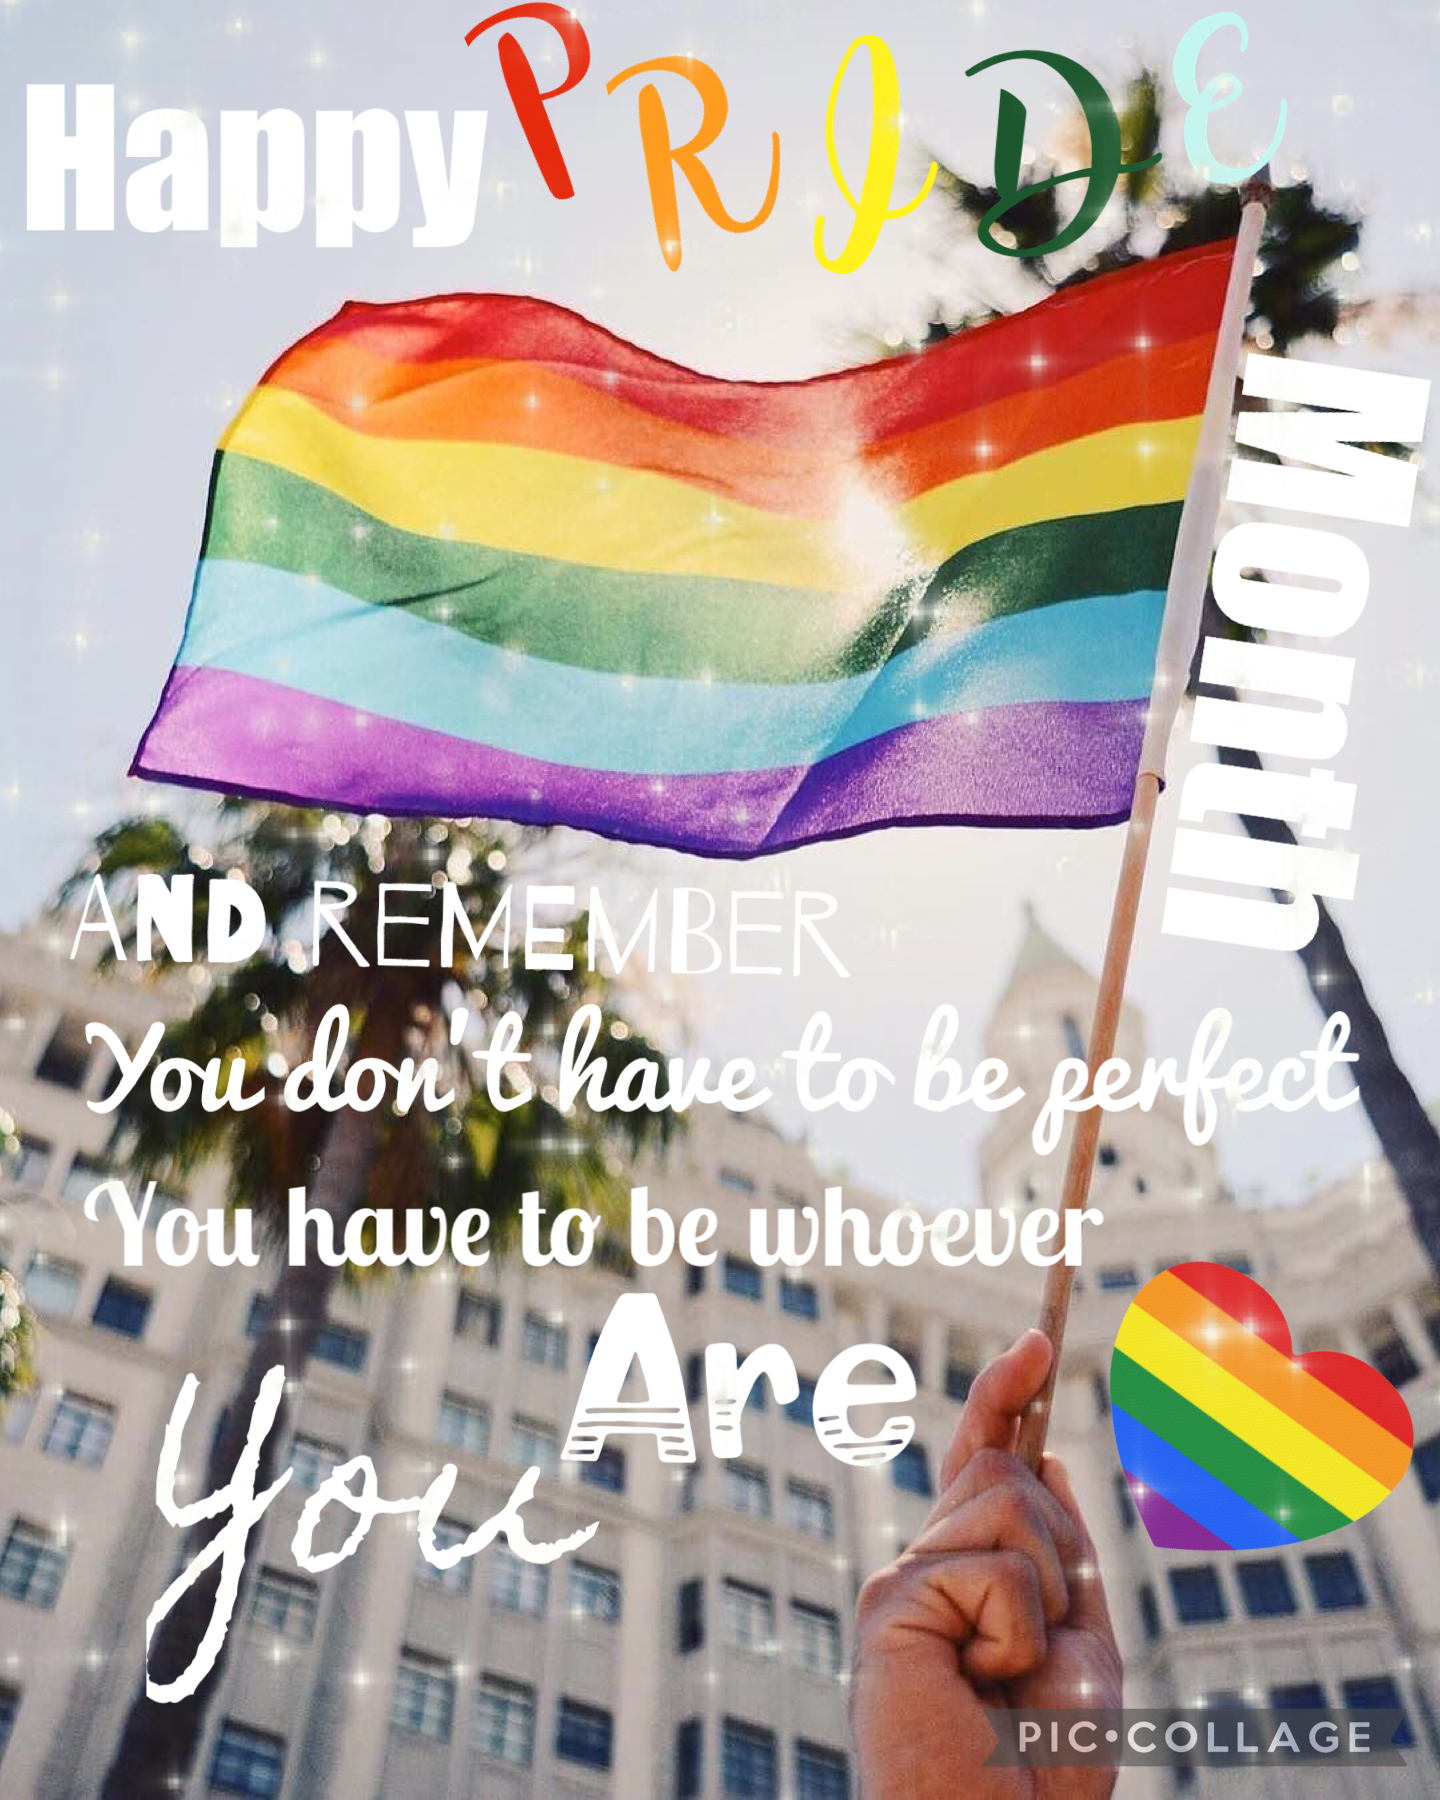 Happy pride month!!